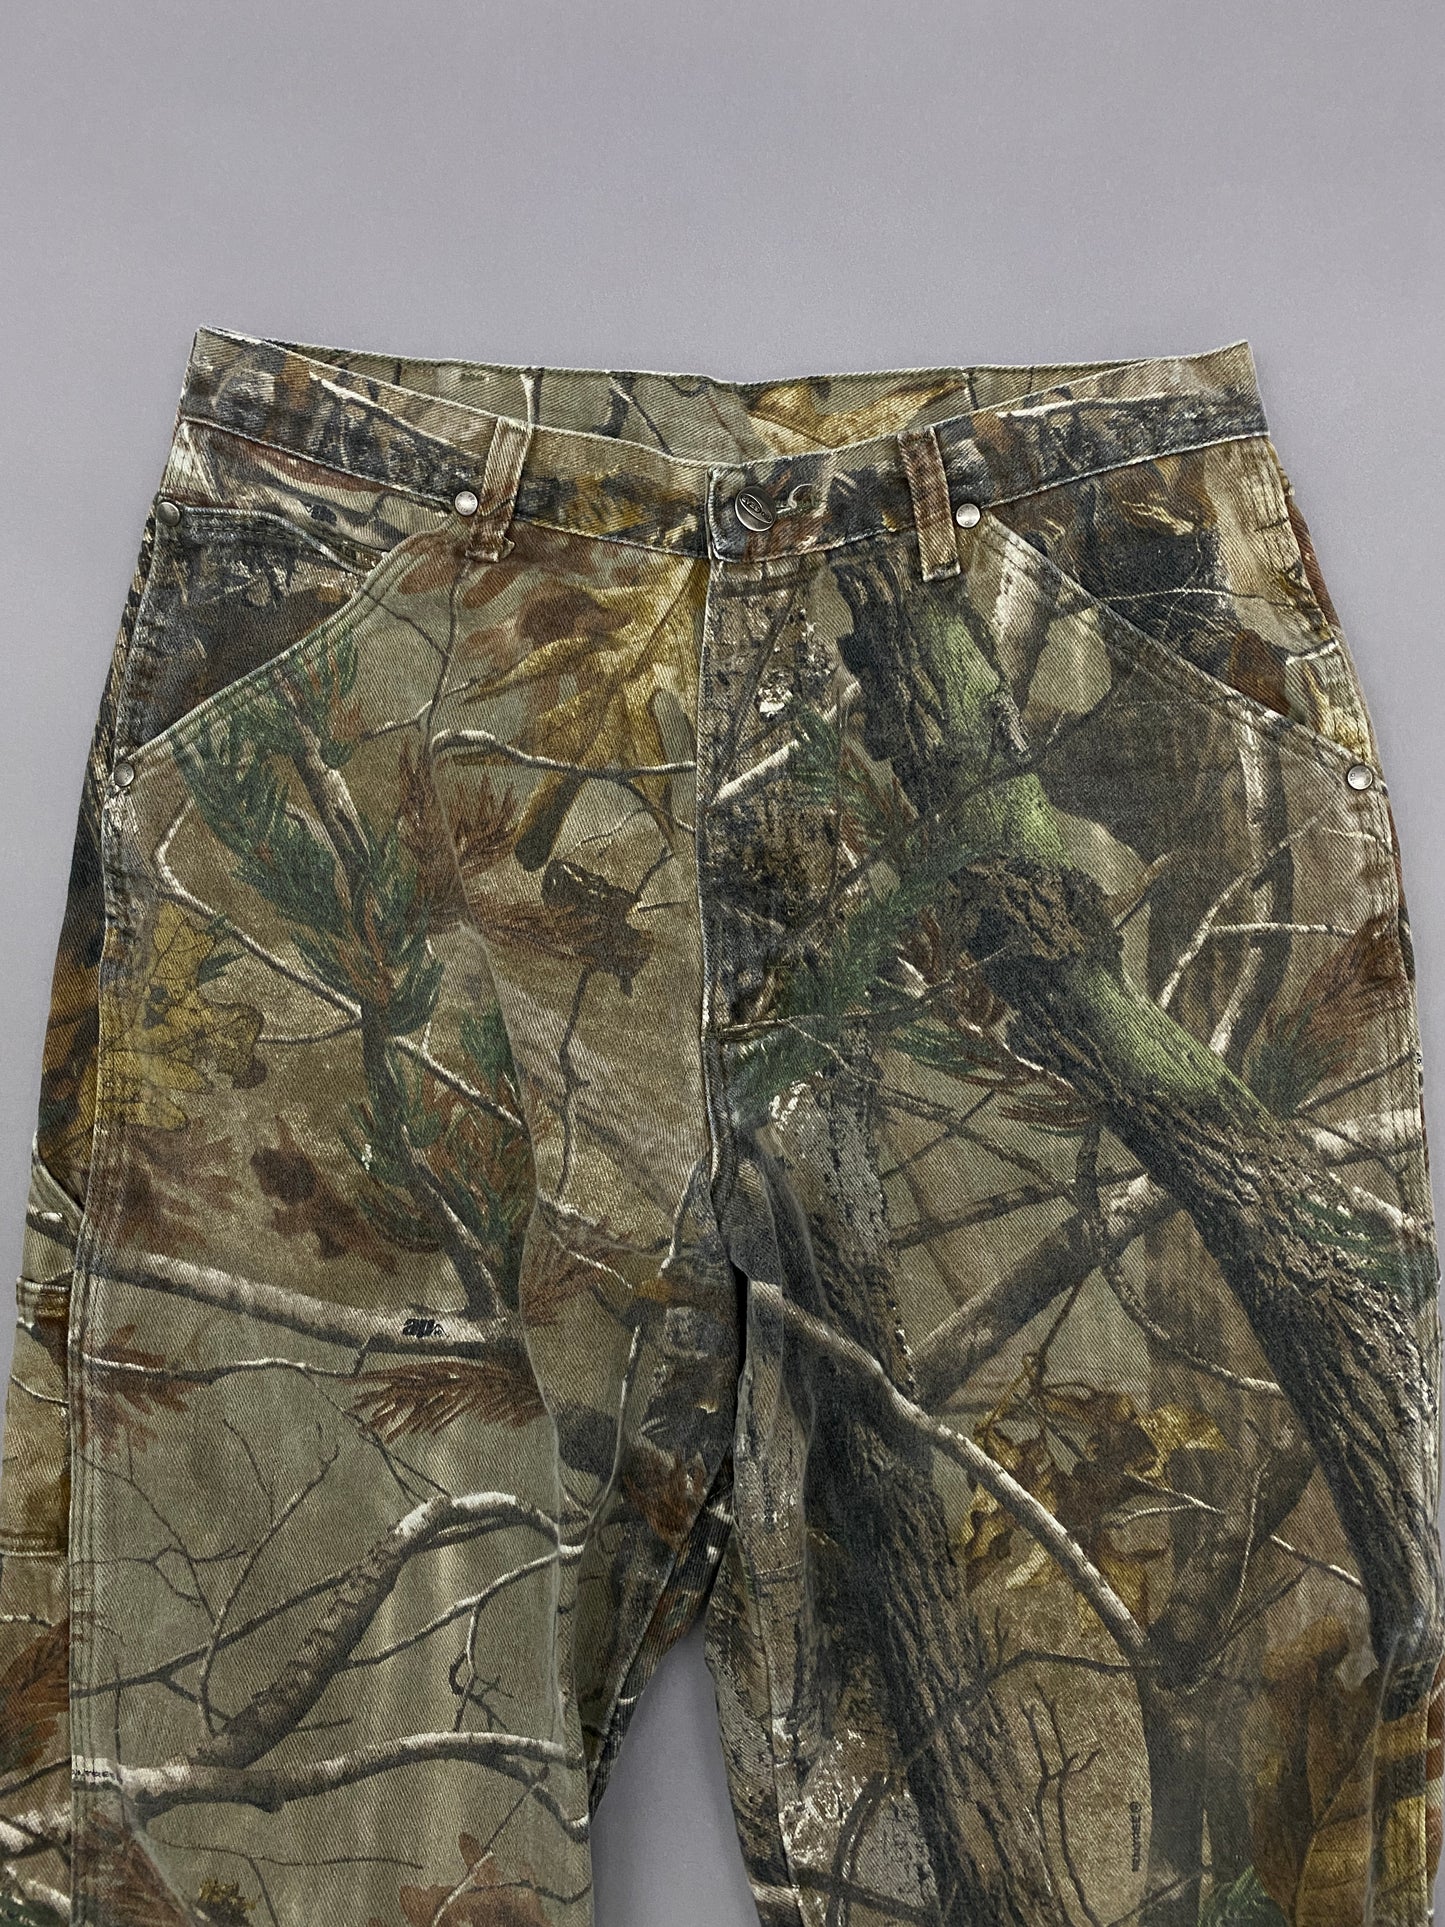 Wrangler Realtree Camo Carpenter Vintage Pants - 34 x 32